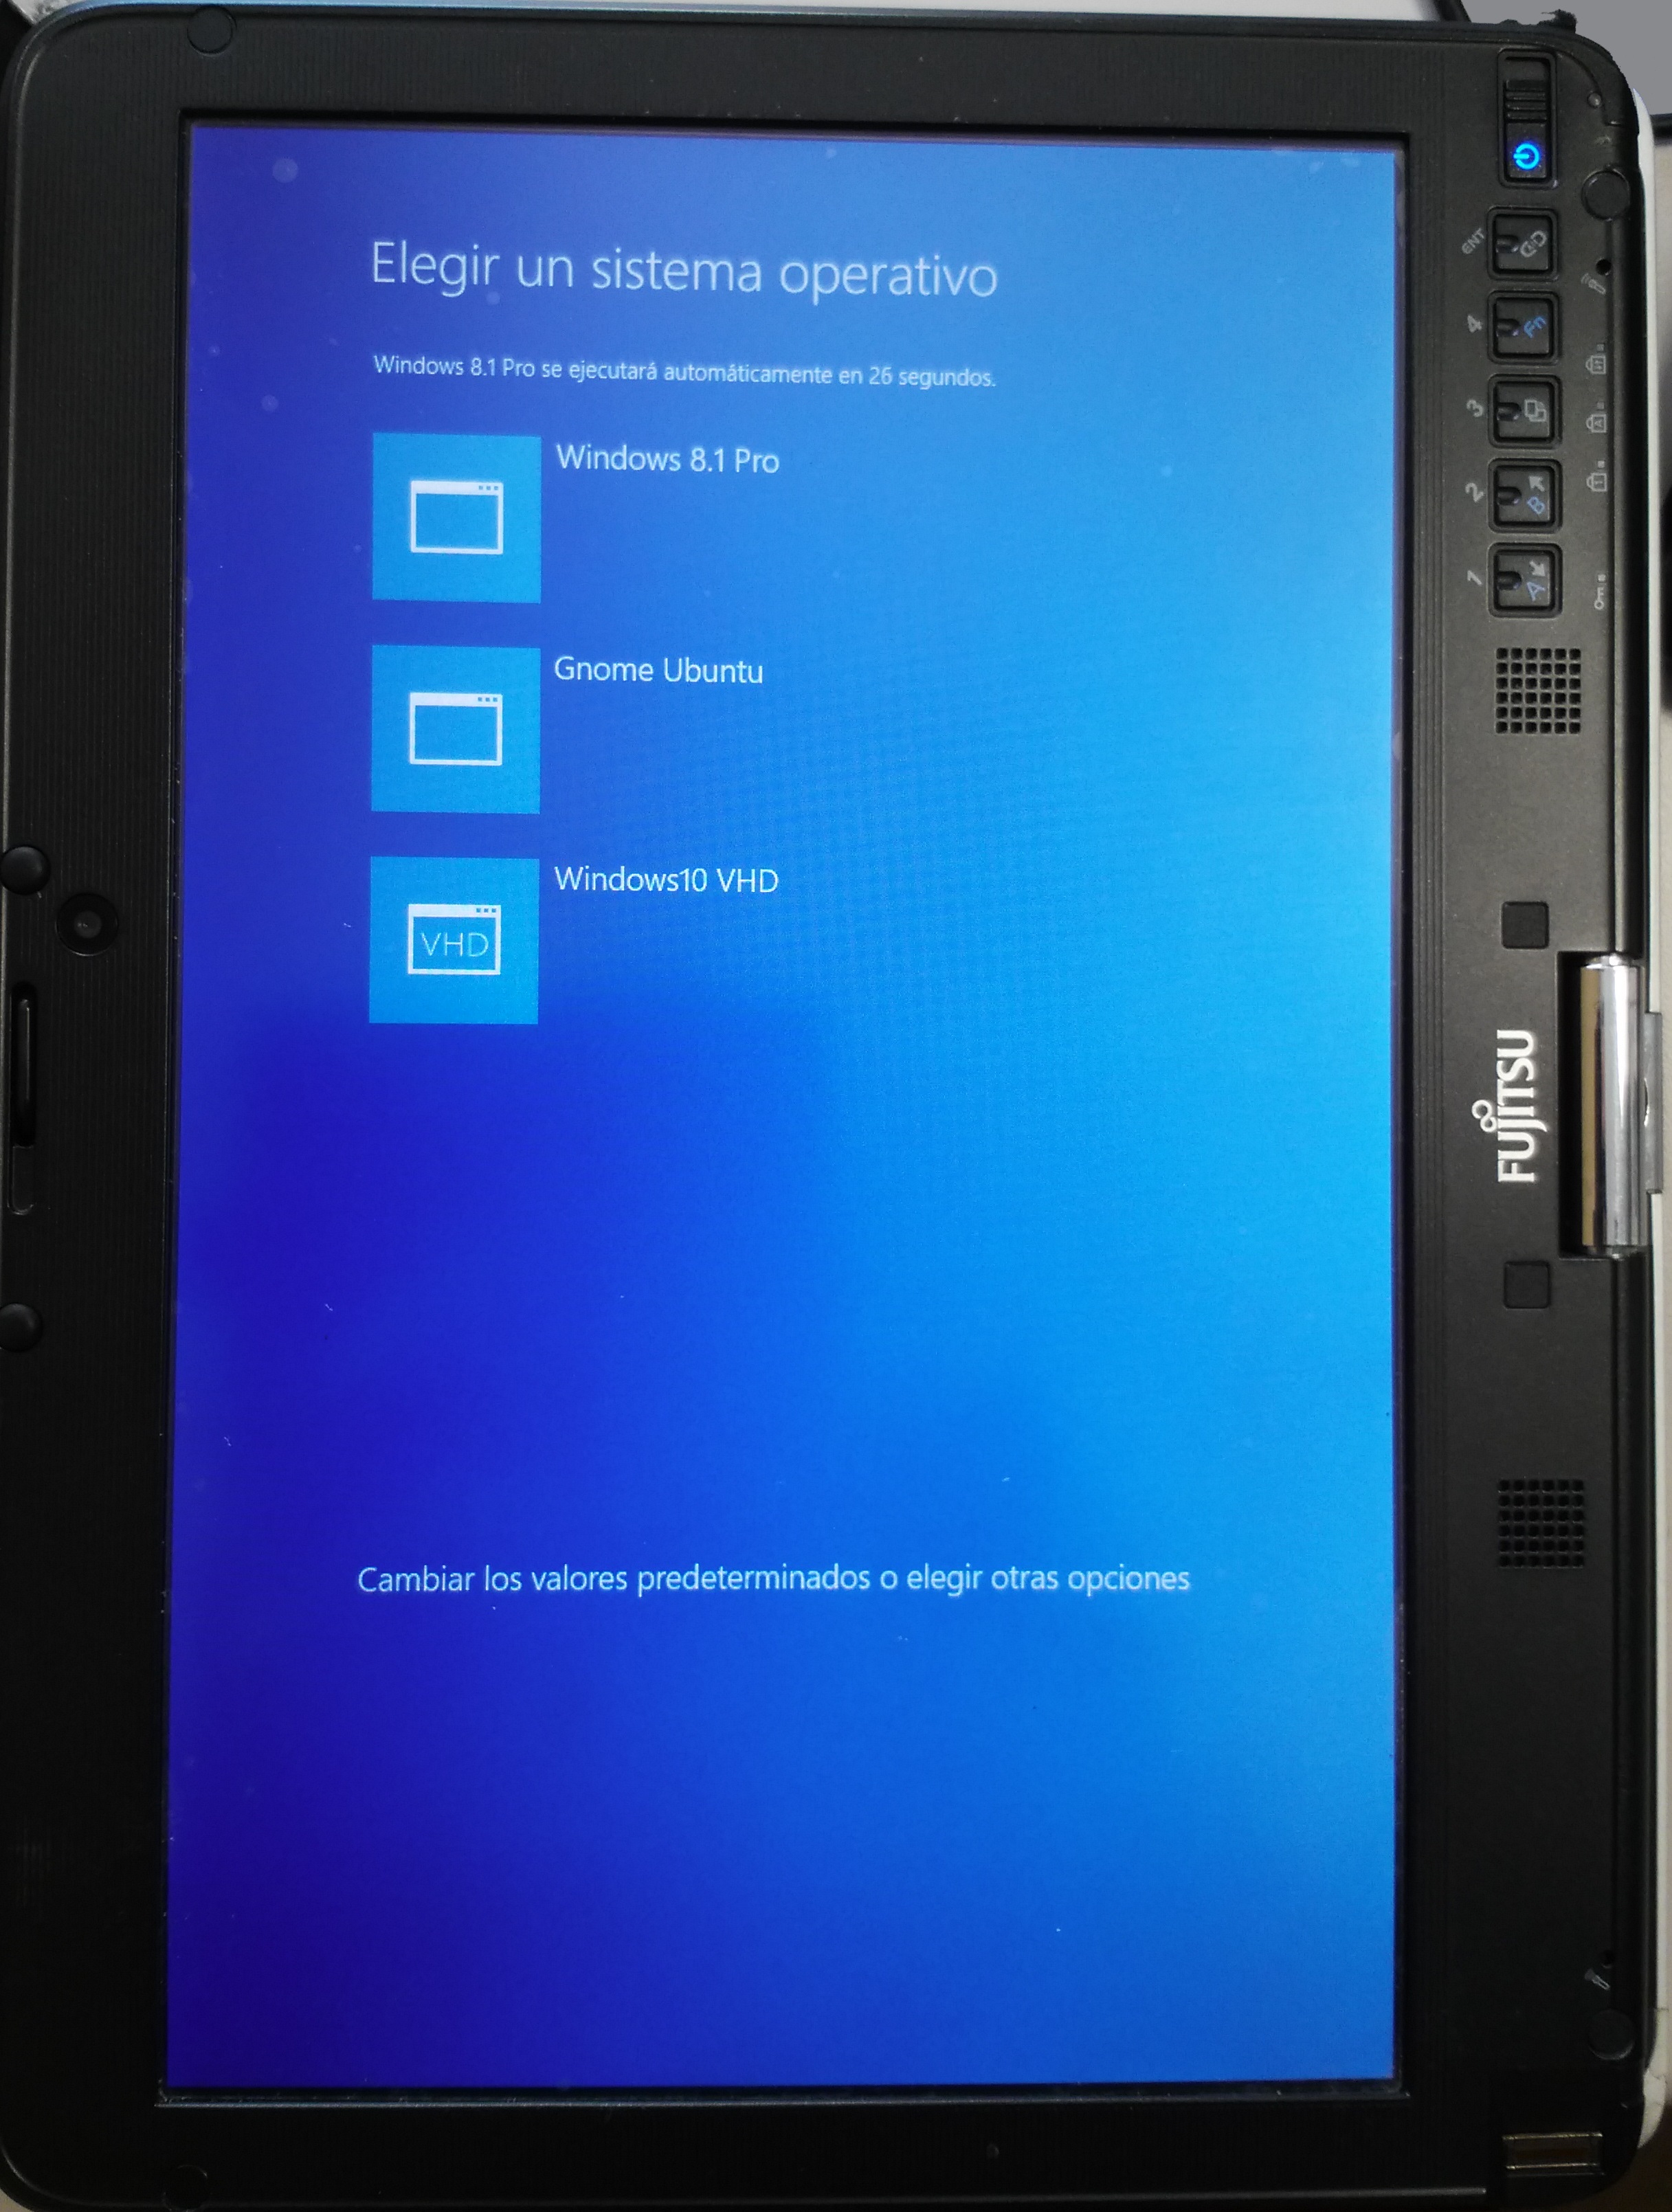 Windows 10 VHD boot